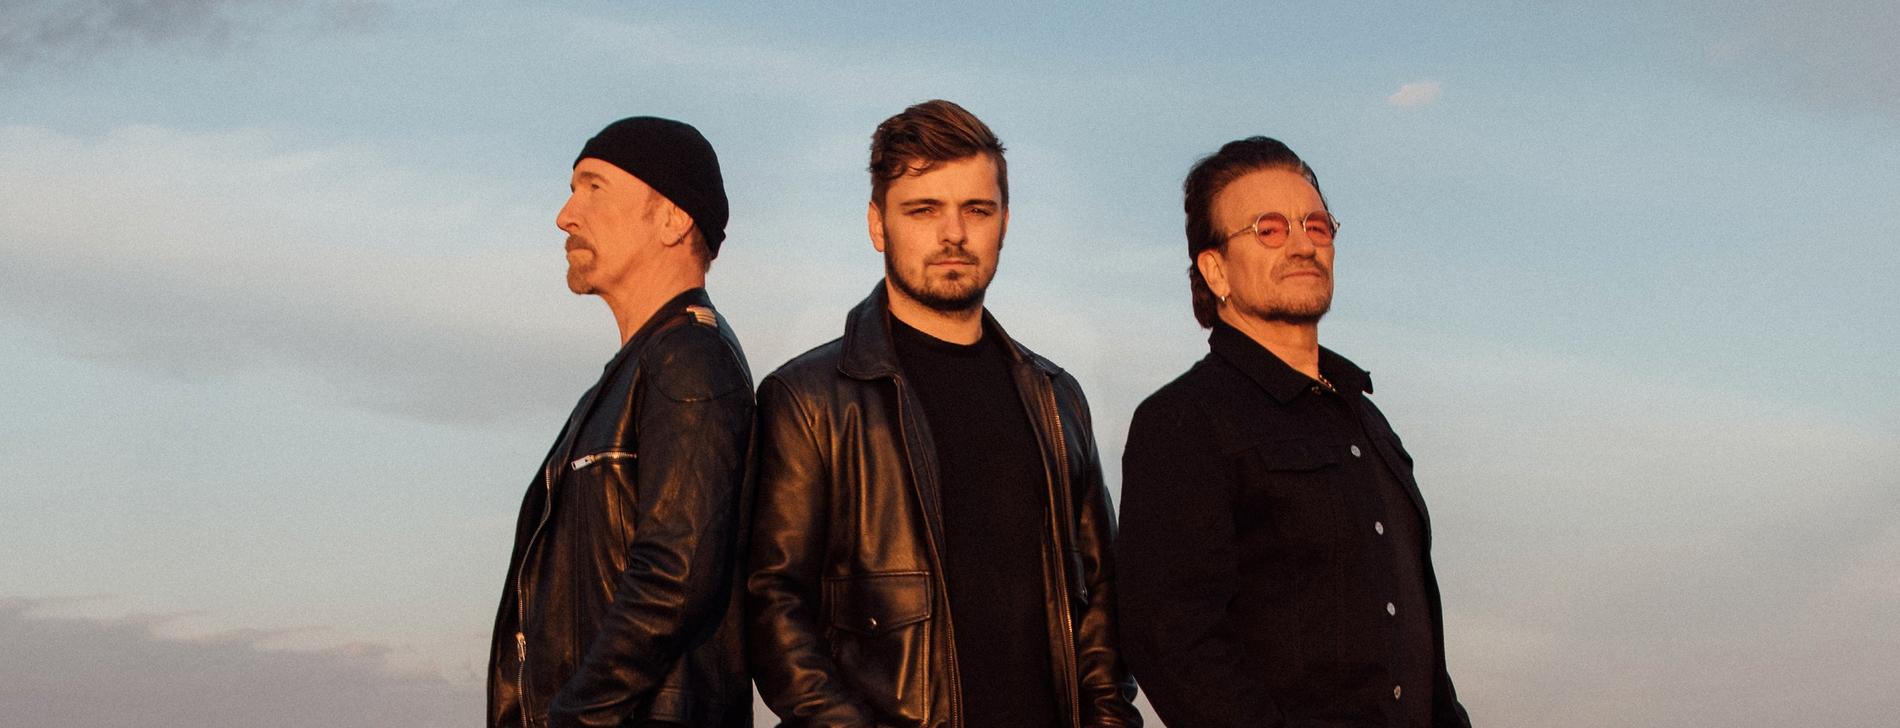 The Edge, Martin Garrix och Bono ligger bakom EM-låten ”We are the people”.